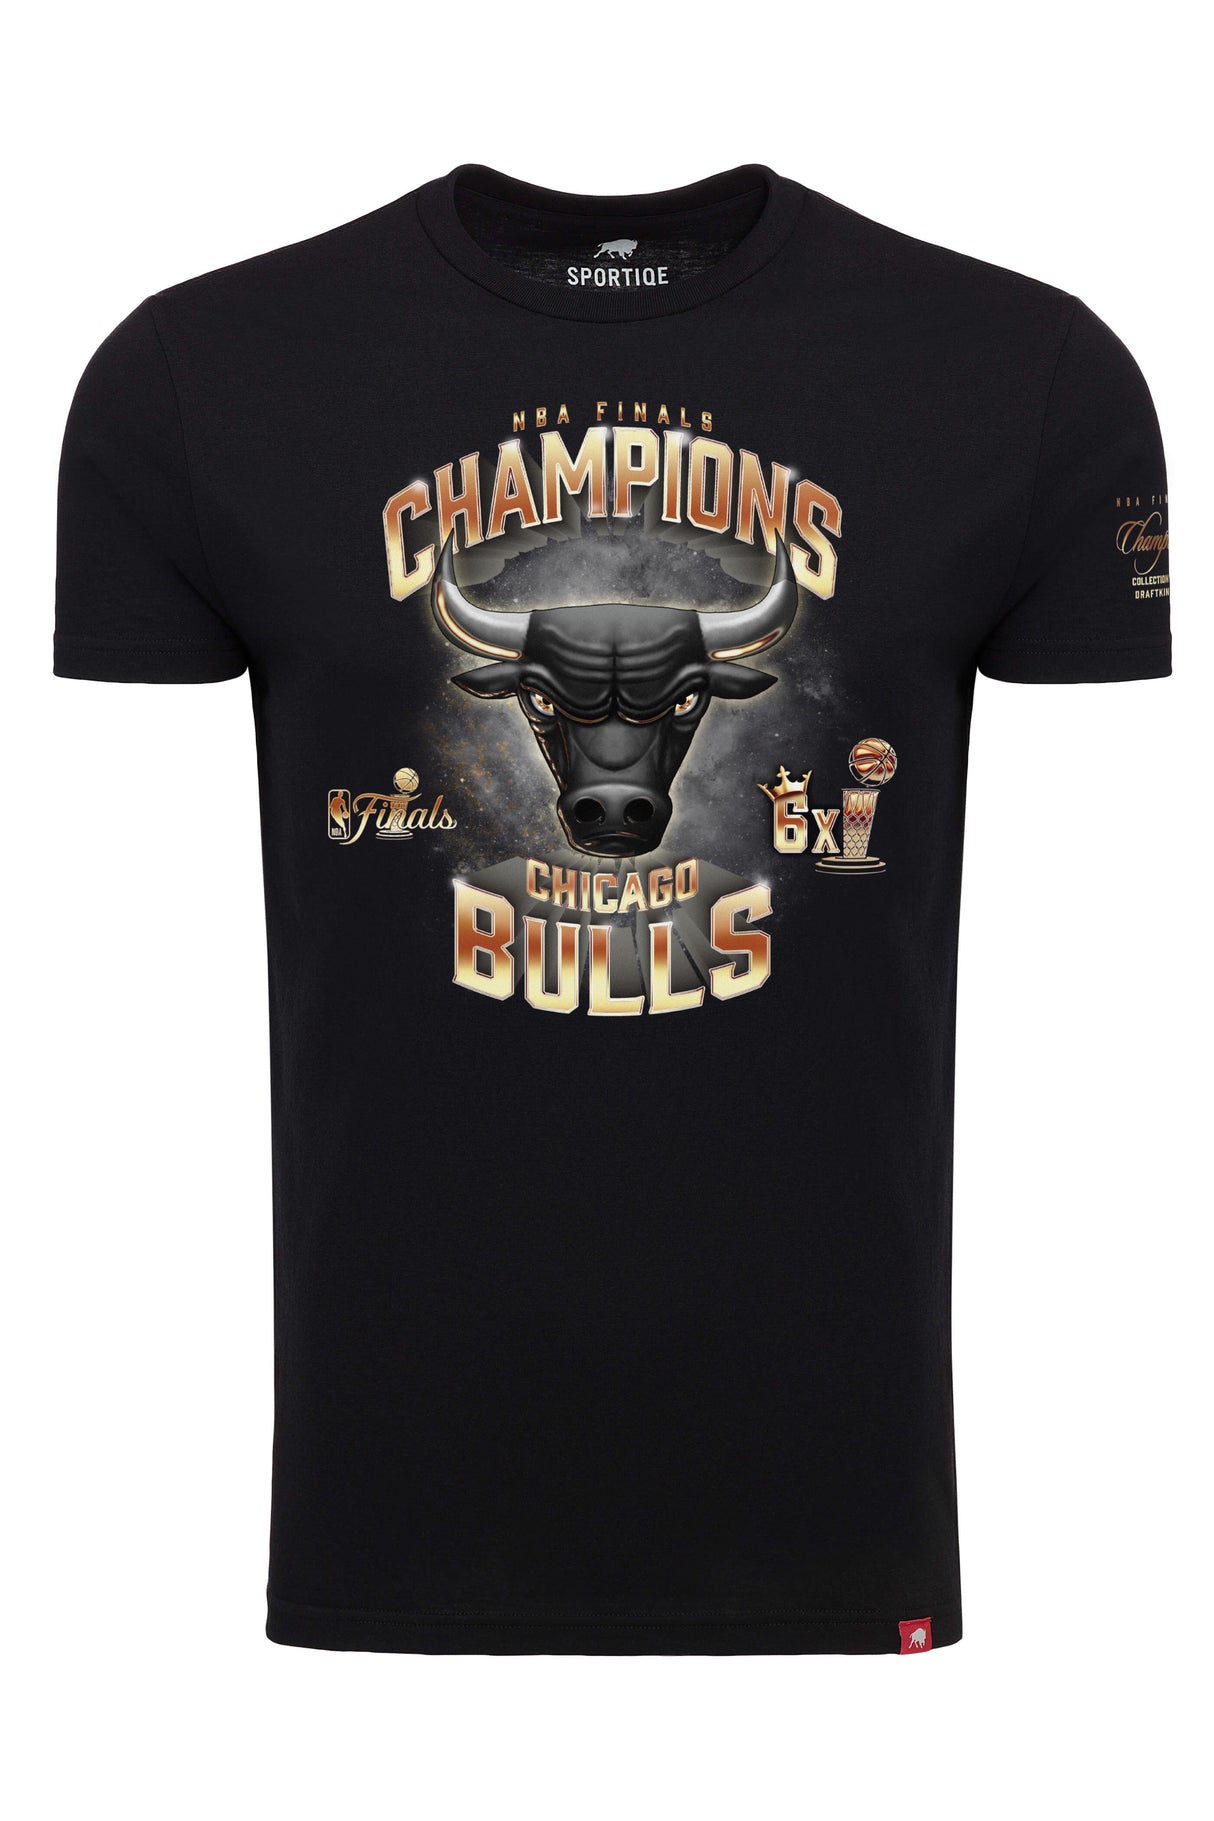 Chicago Bulls Champions Sportiqe Comfy T-Shirt